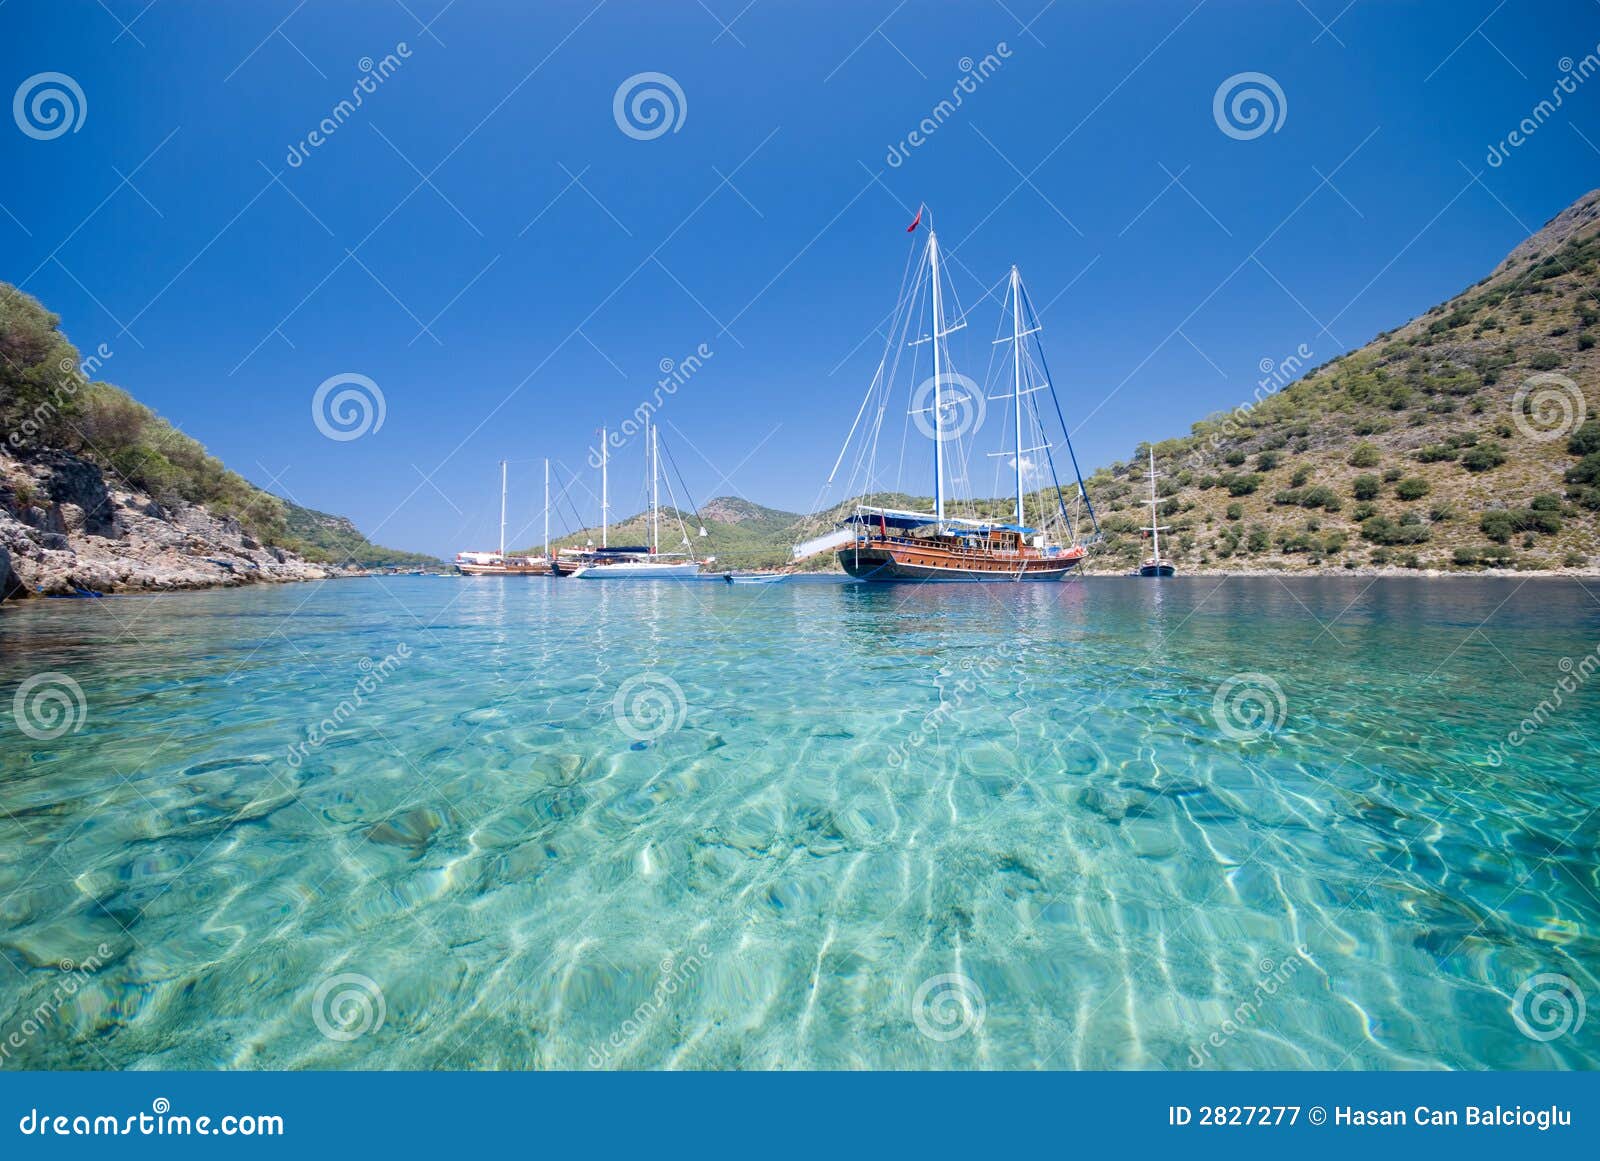 boats on the mediterranean sea